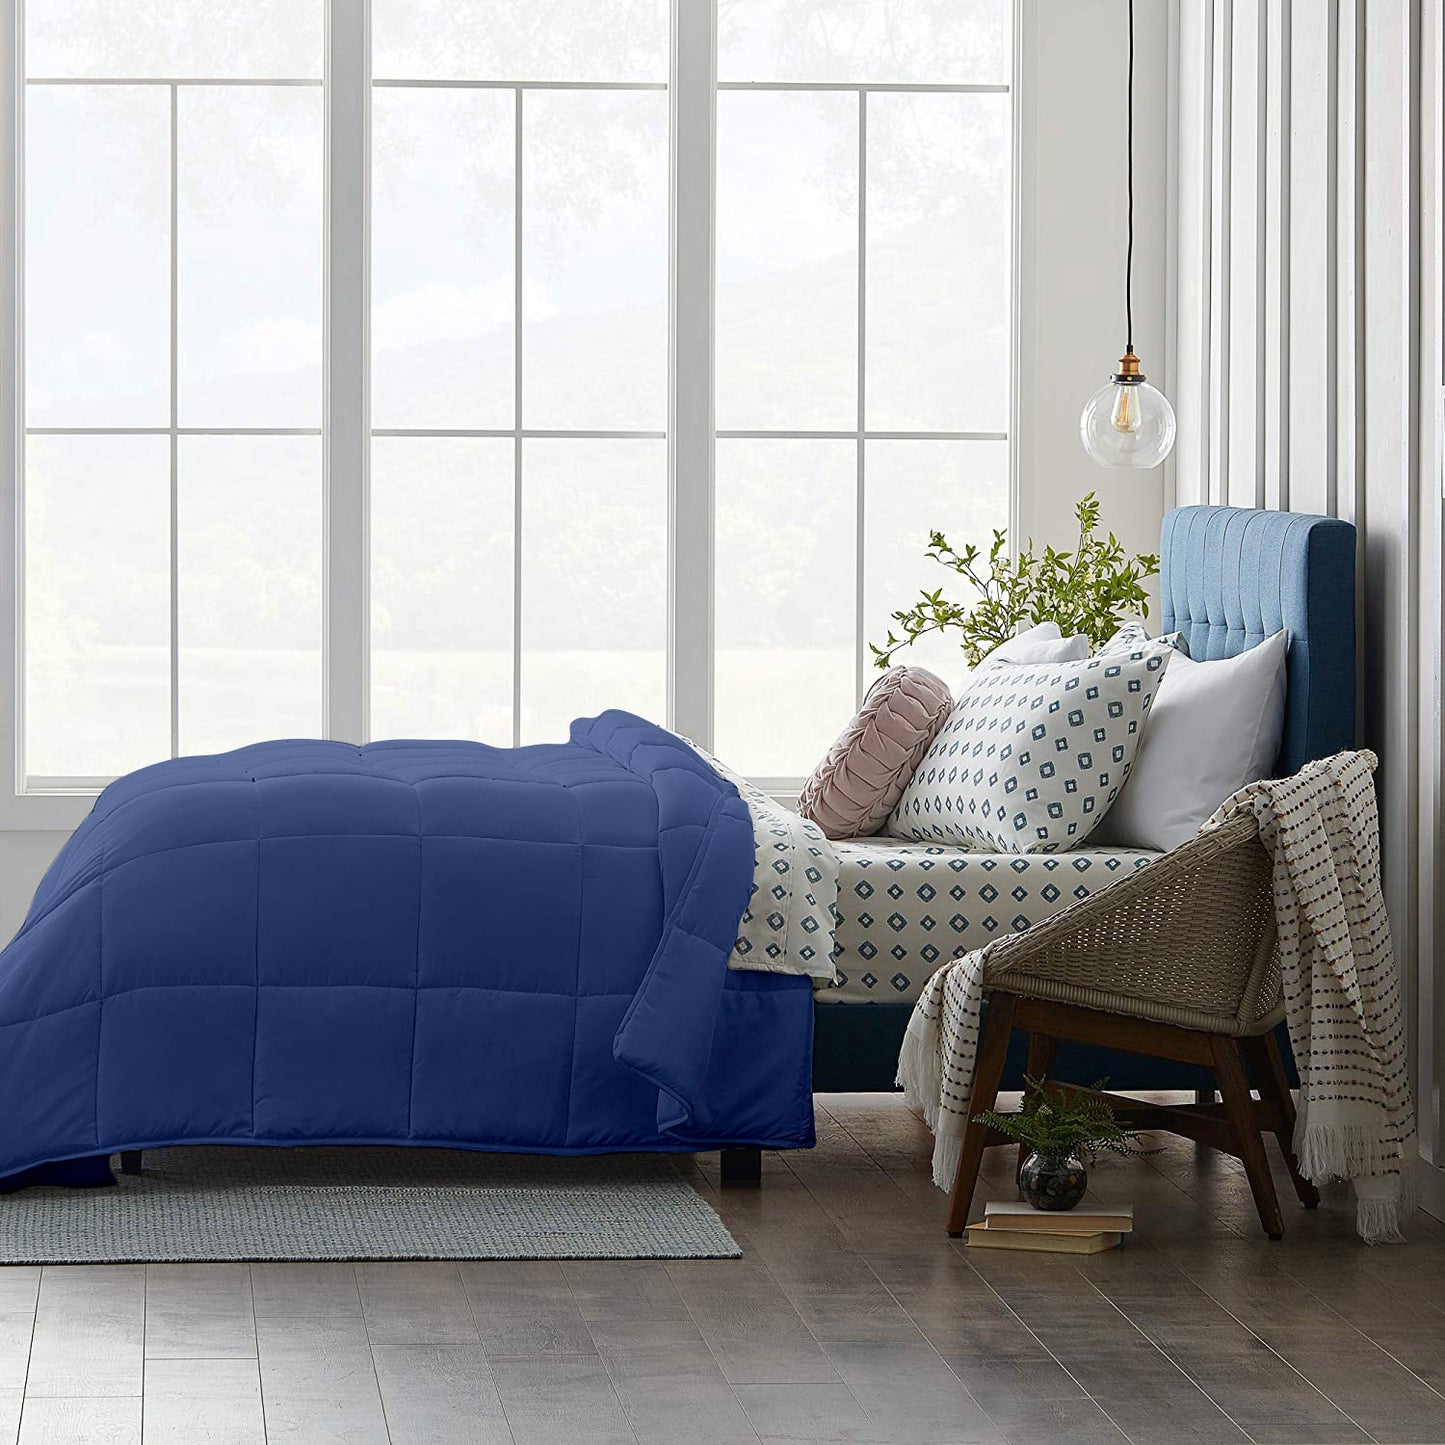 Razzai 500 GSM Winter Comforter Premium Collection Quilted |Medium Blue| Microfiber Comforter, Lightweight